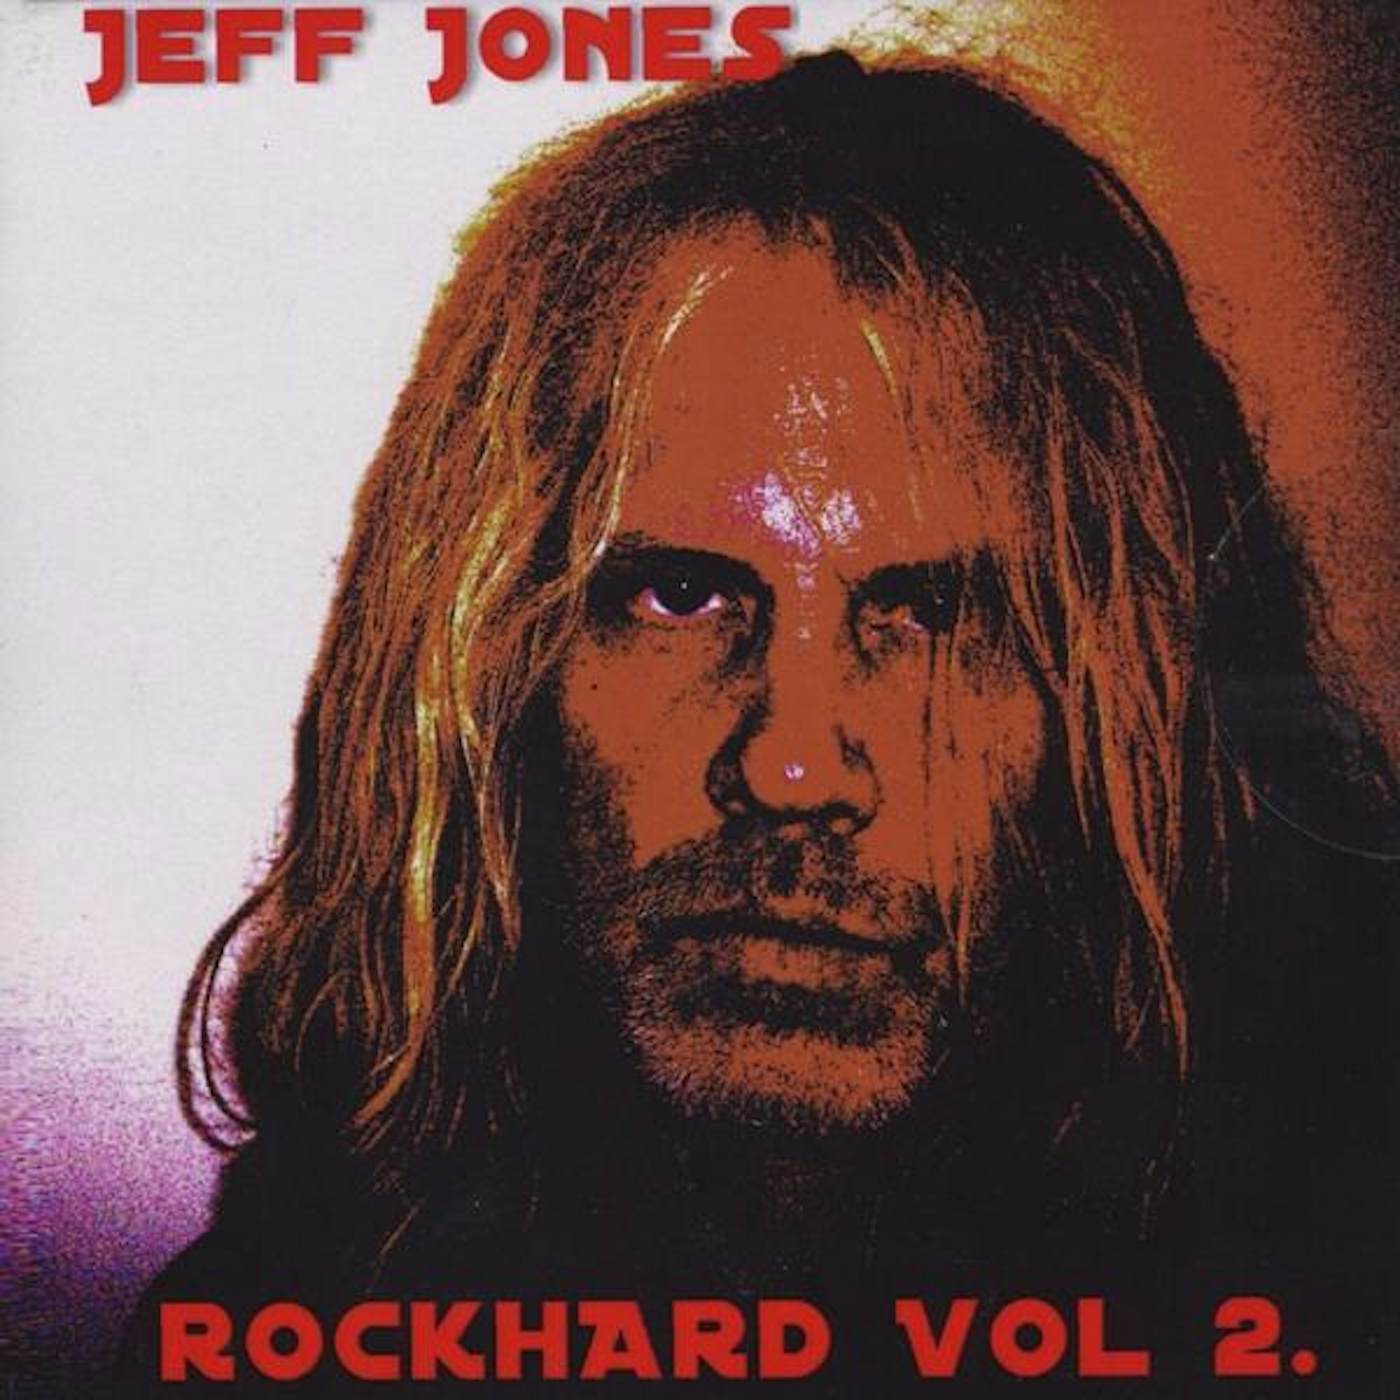 Jeff Jones ROCKHARD 2 CD